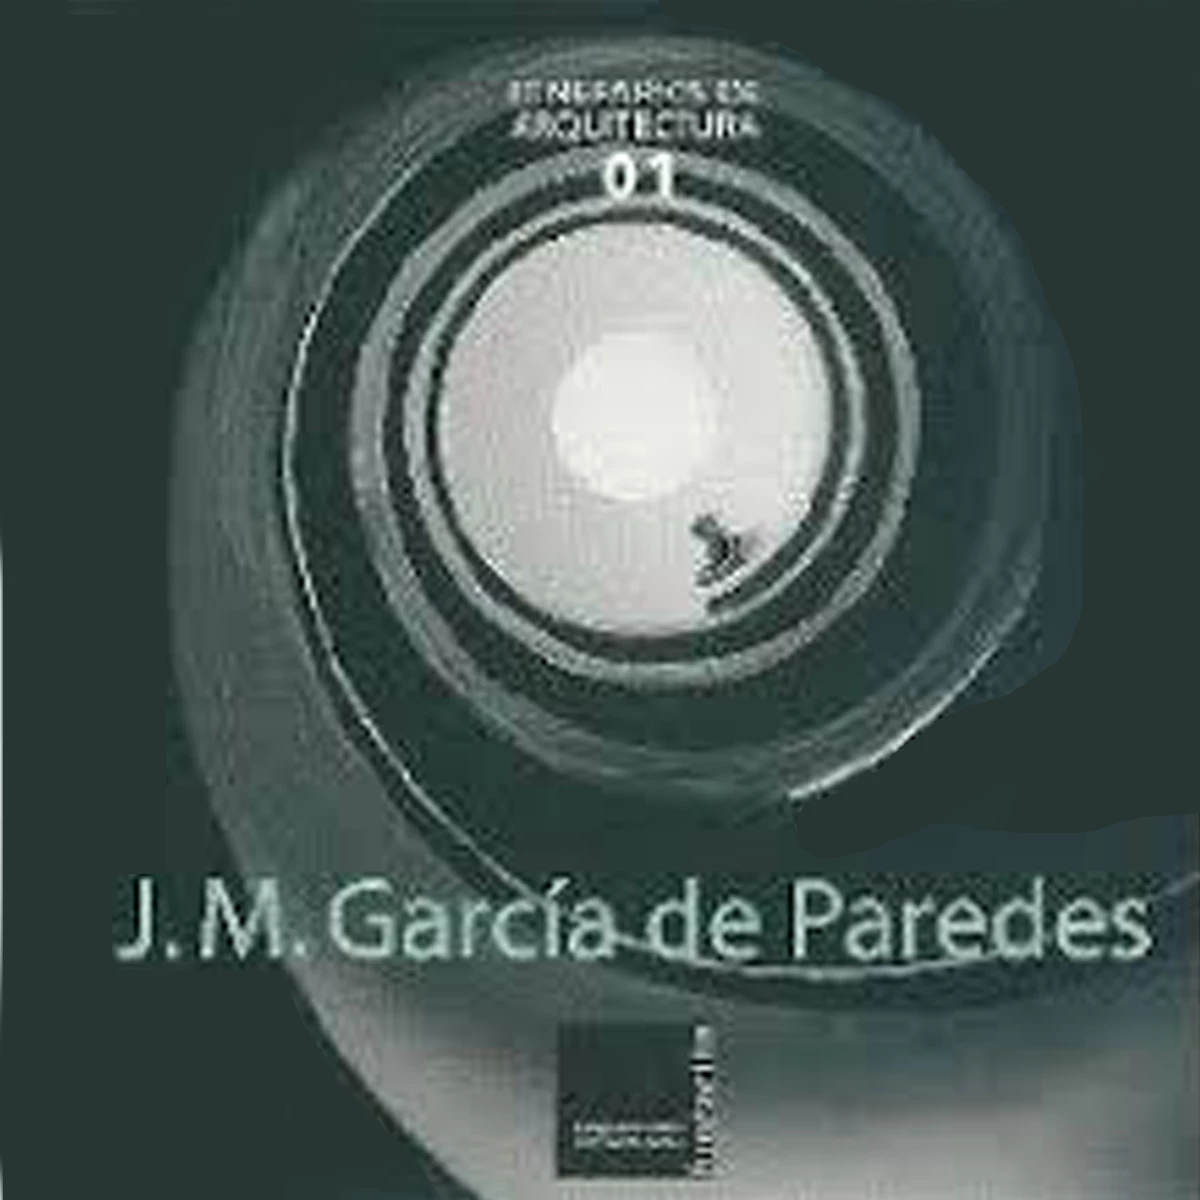 J. M. García de Paredes